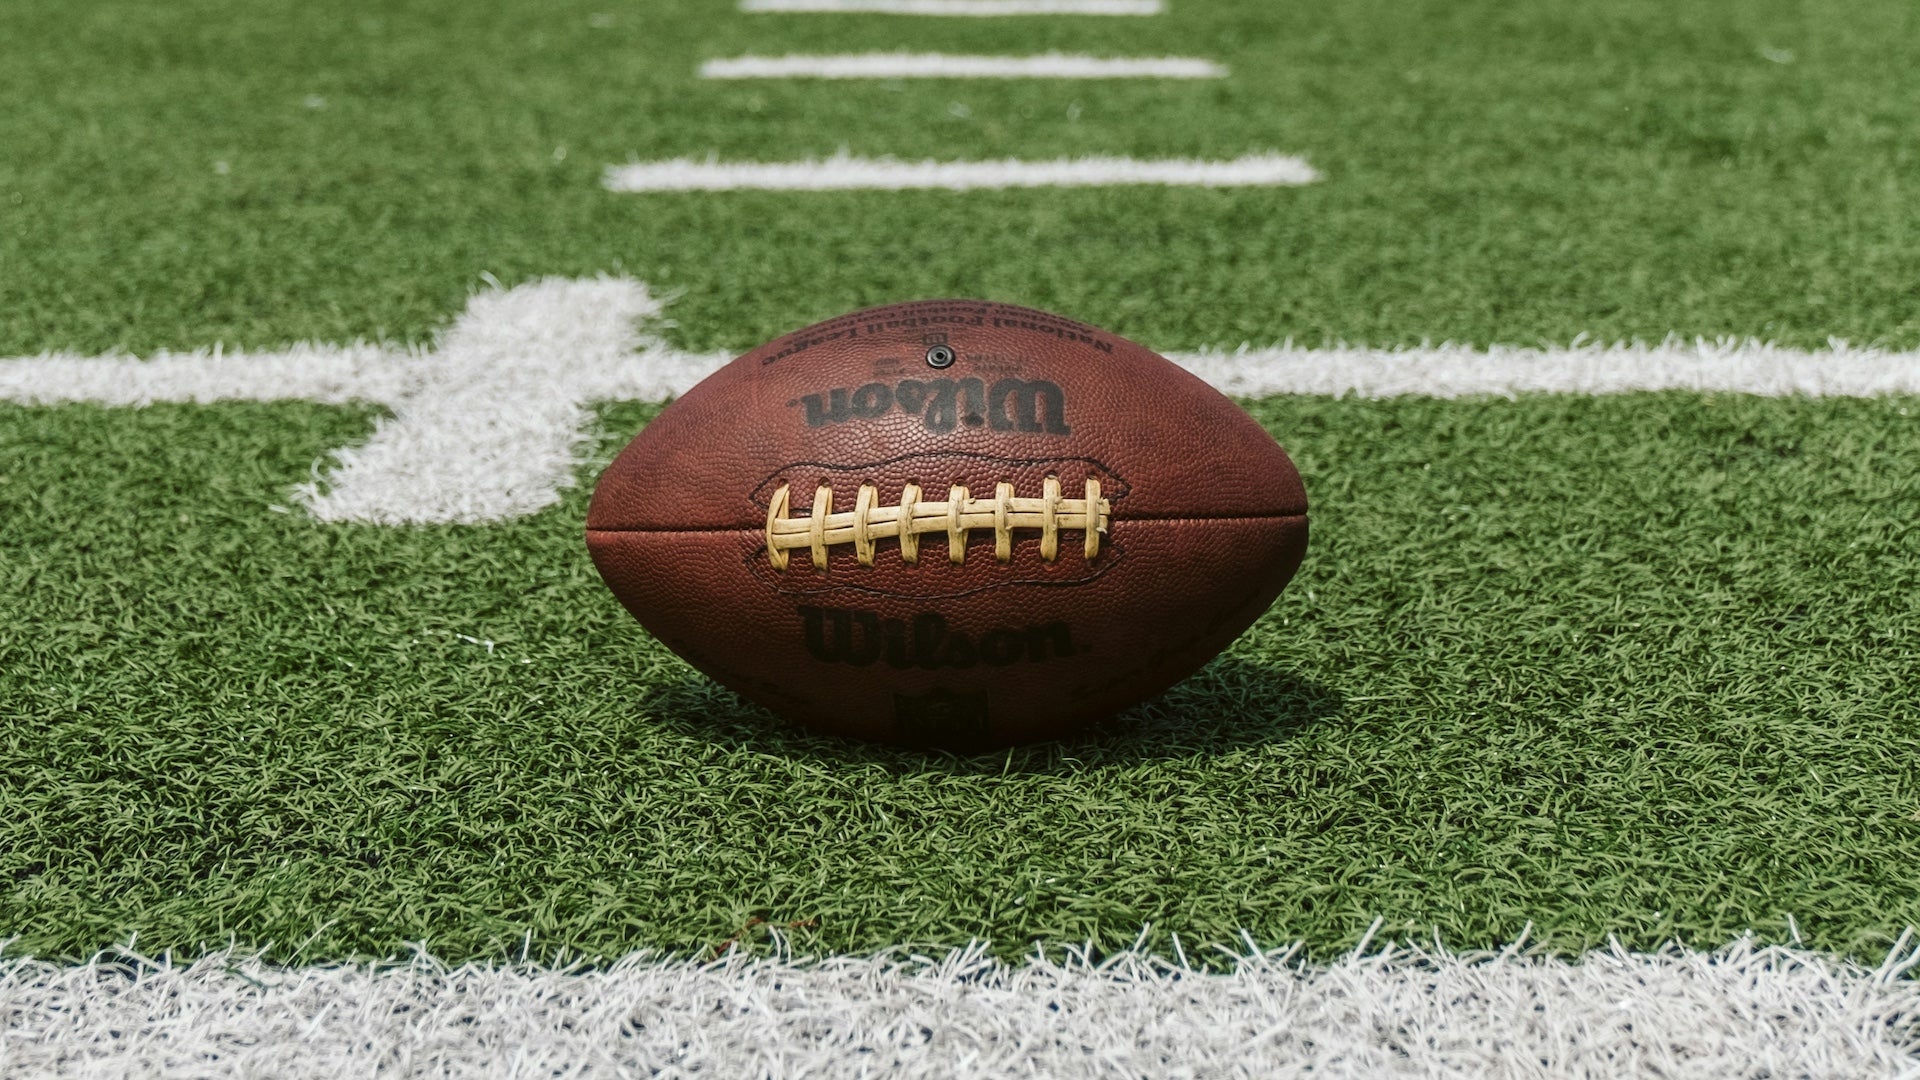 Wilson football sitting on a green football field